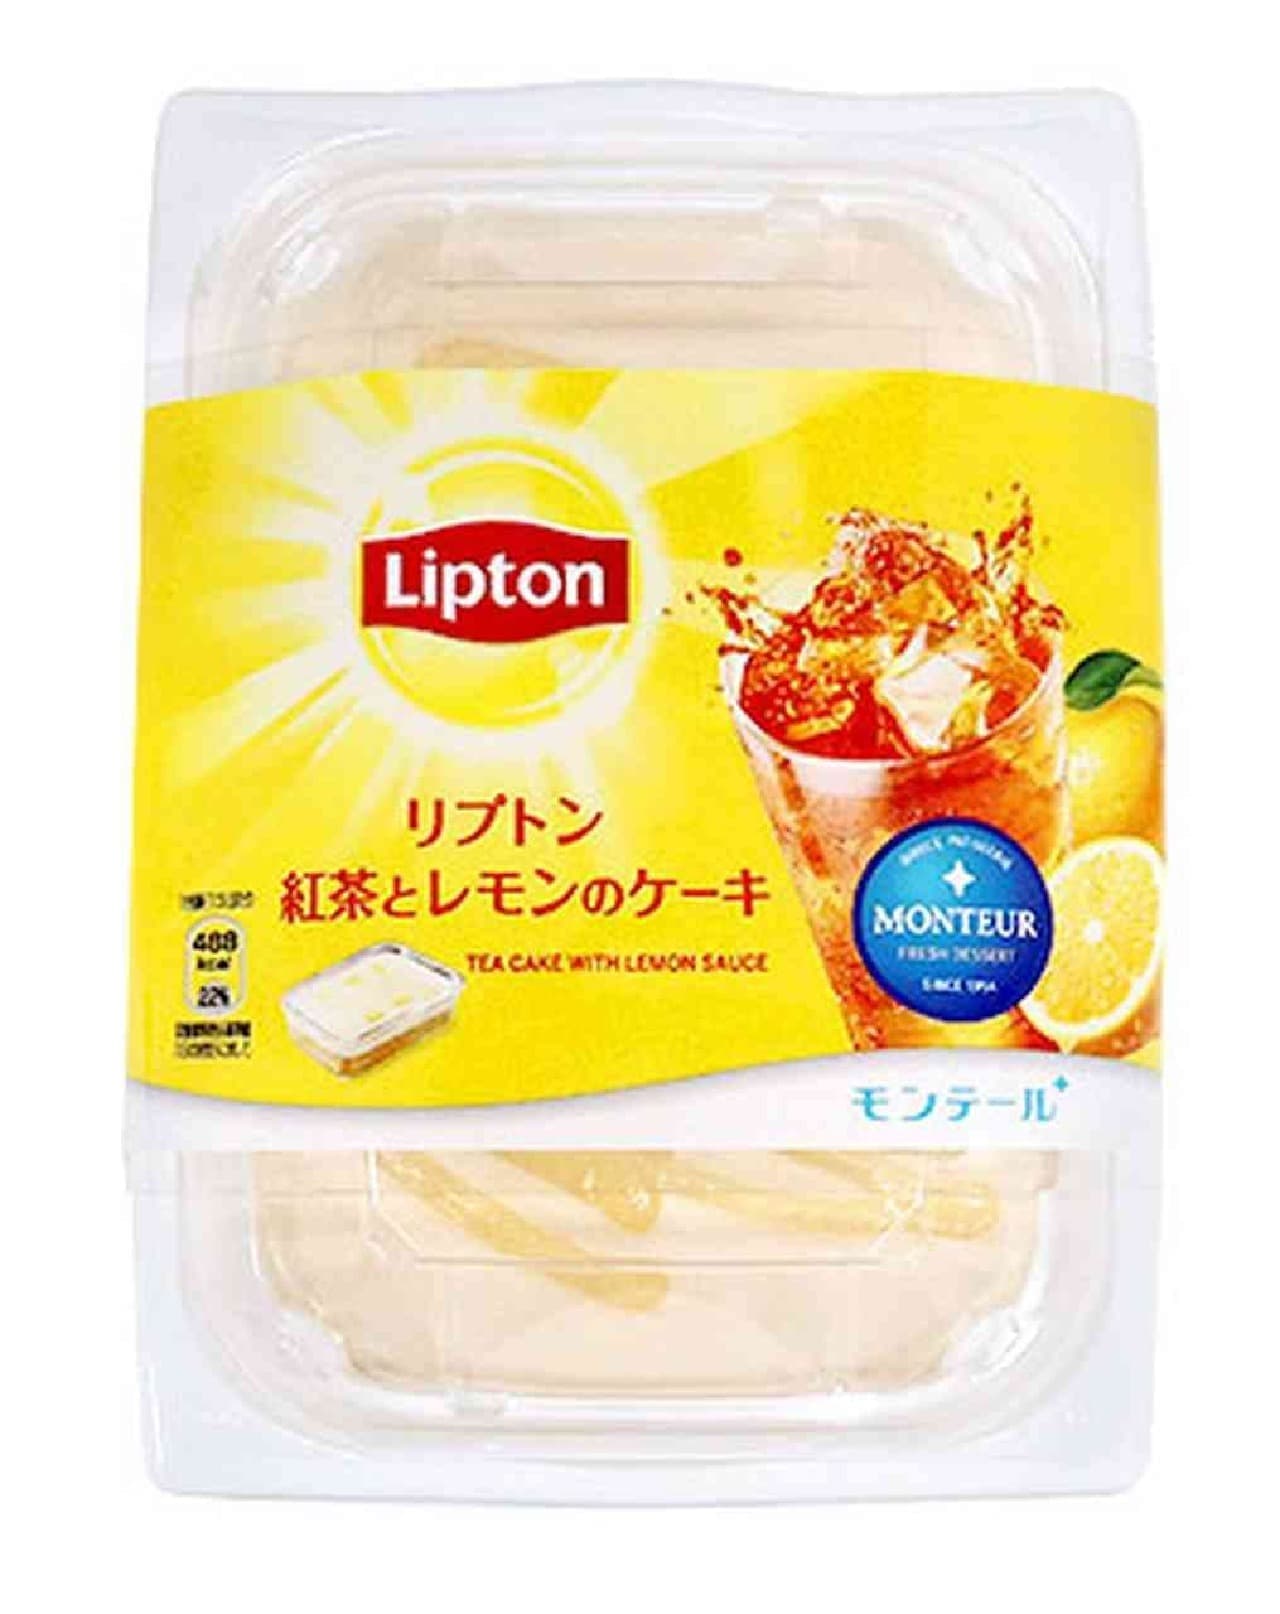 Lipton x Montale "Lipton Black Tea and Lemon Cake